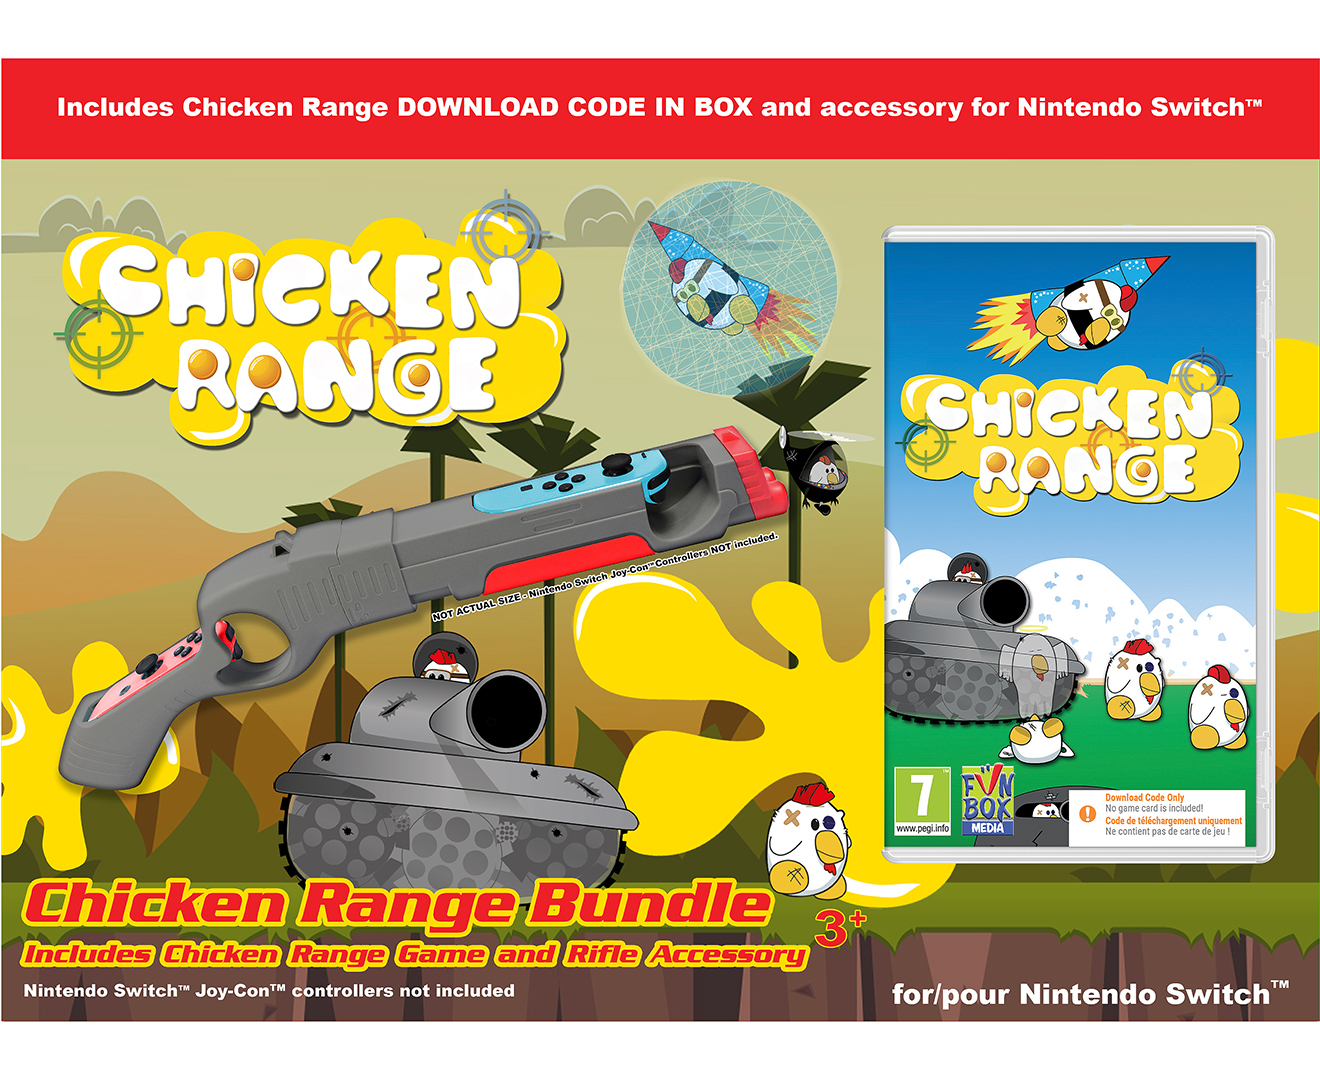 Nintendo Switch Chicken Range Game Code and Rifle Accessory Bundle Catch.au